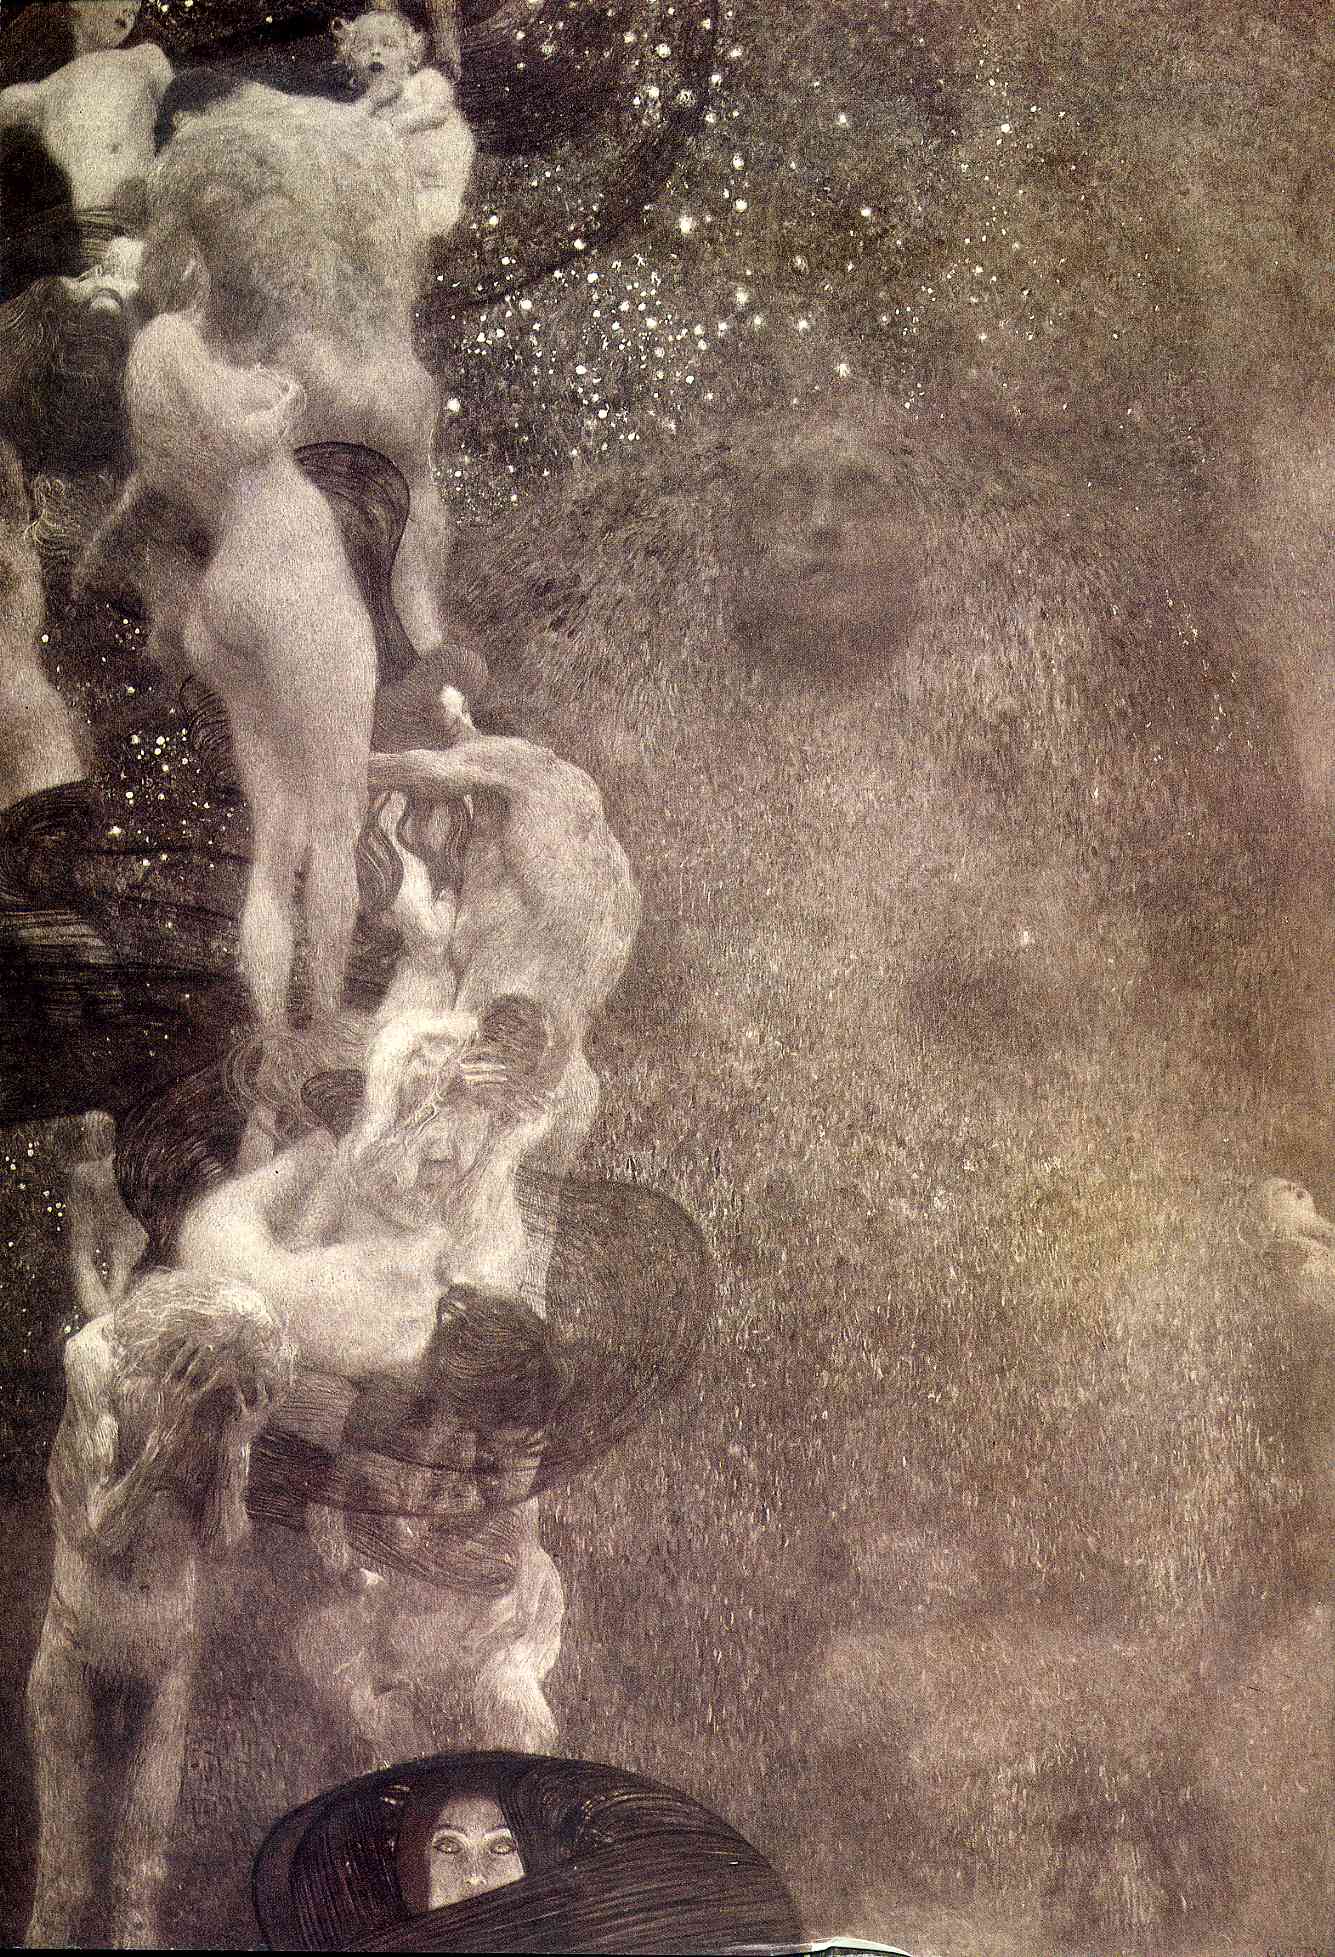 Philosophy-final-state-1907-Klimt-U-of-Vienna-Ceiling-1